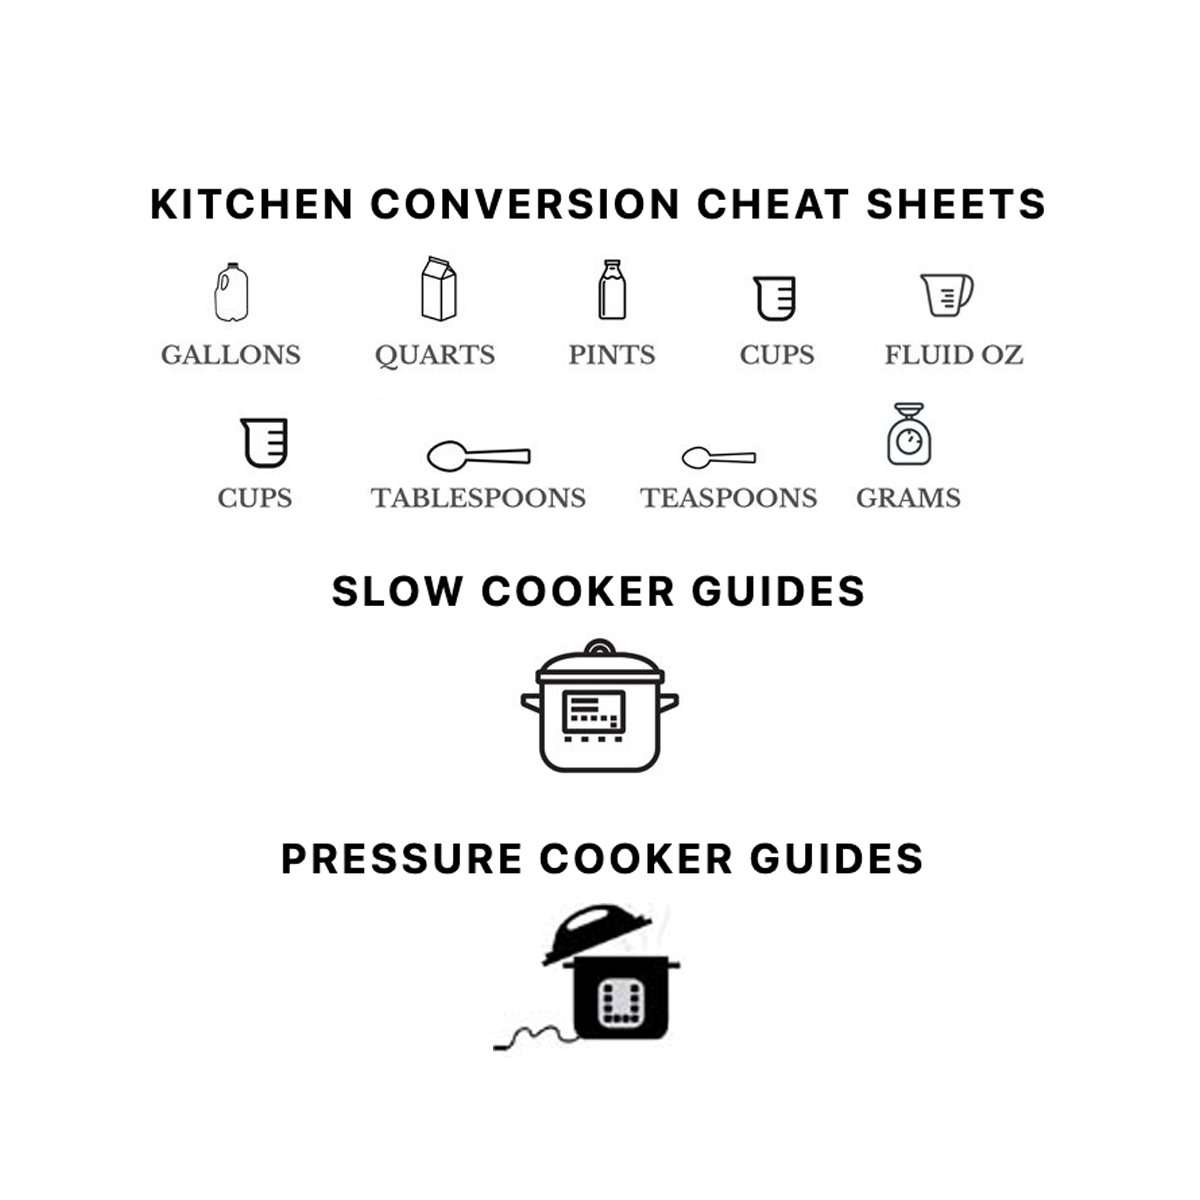 Thumbnail of kitchen cheat sheets.